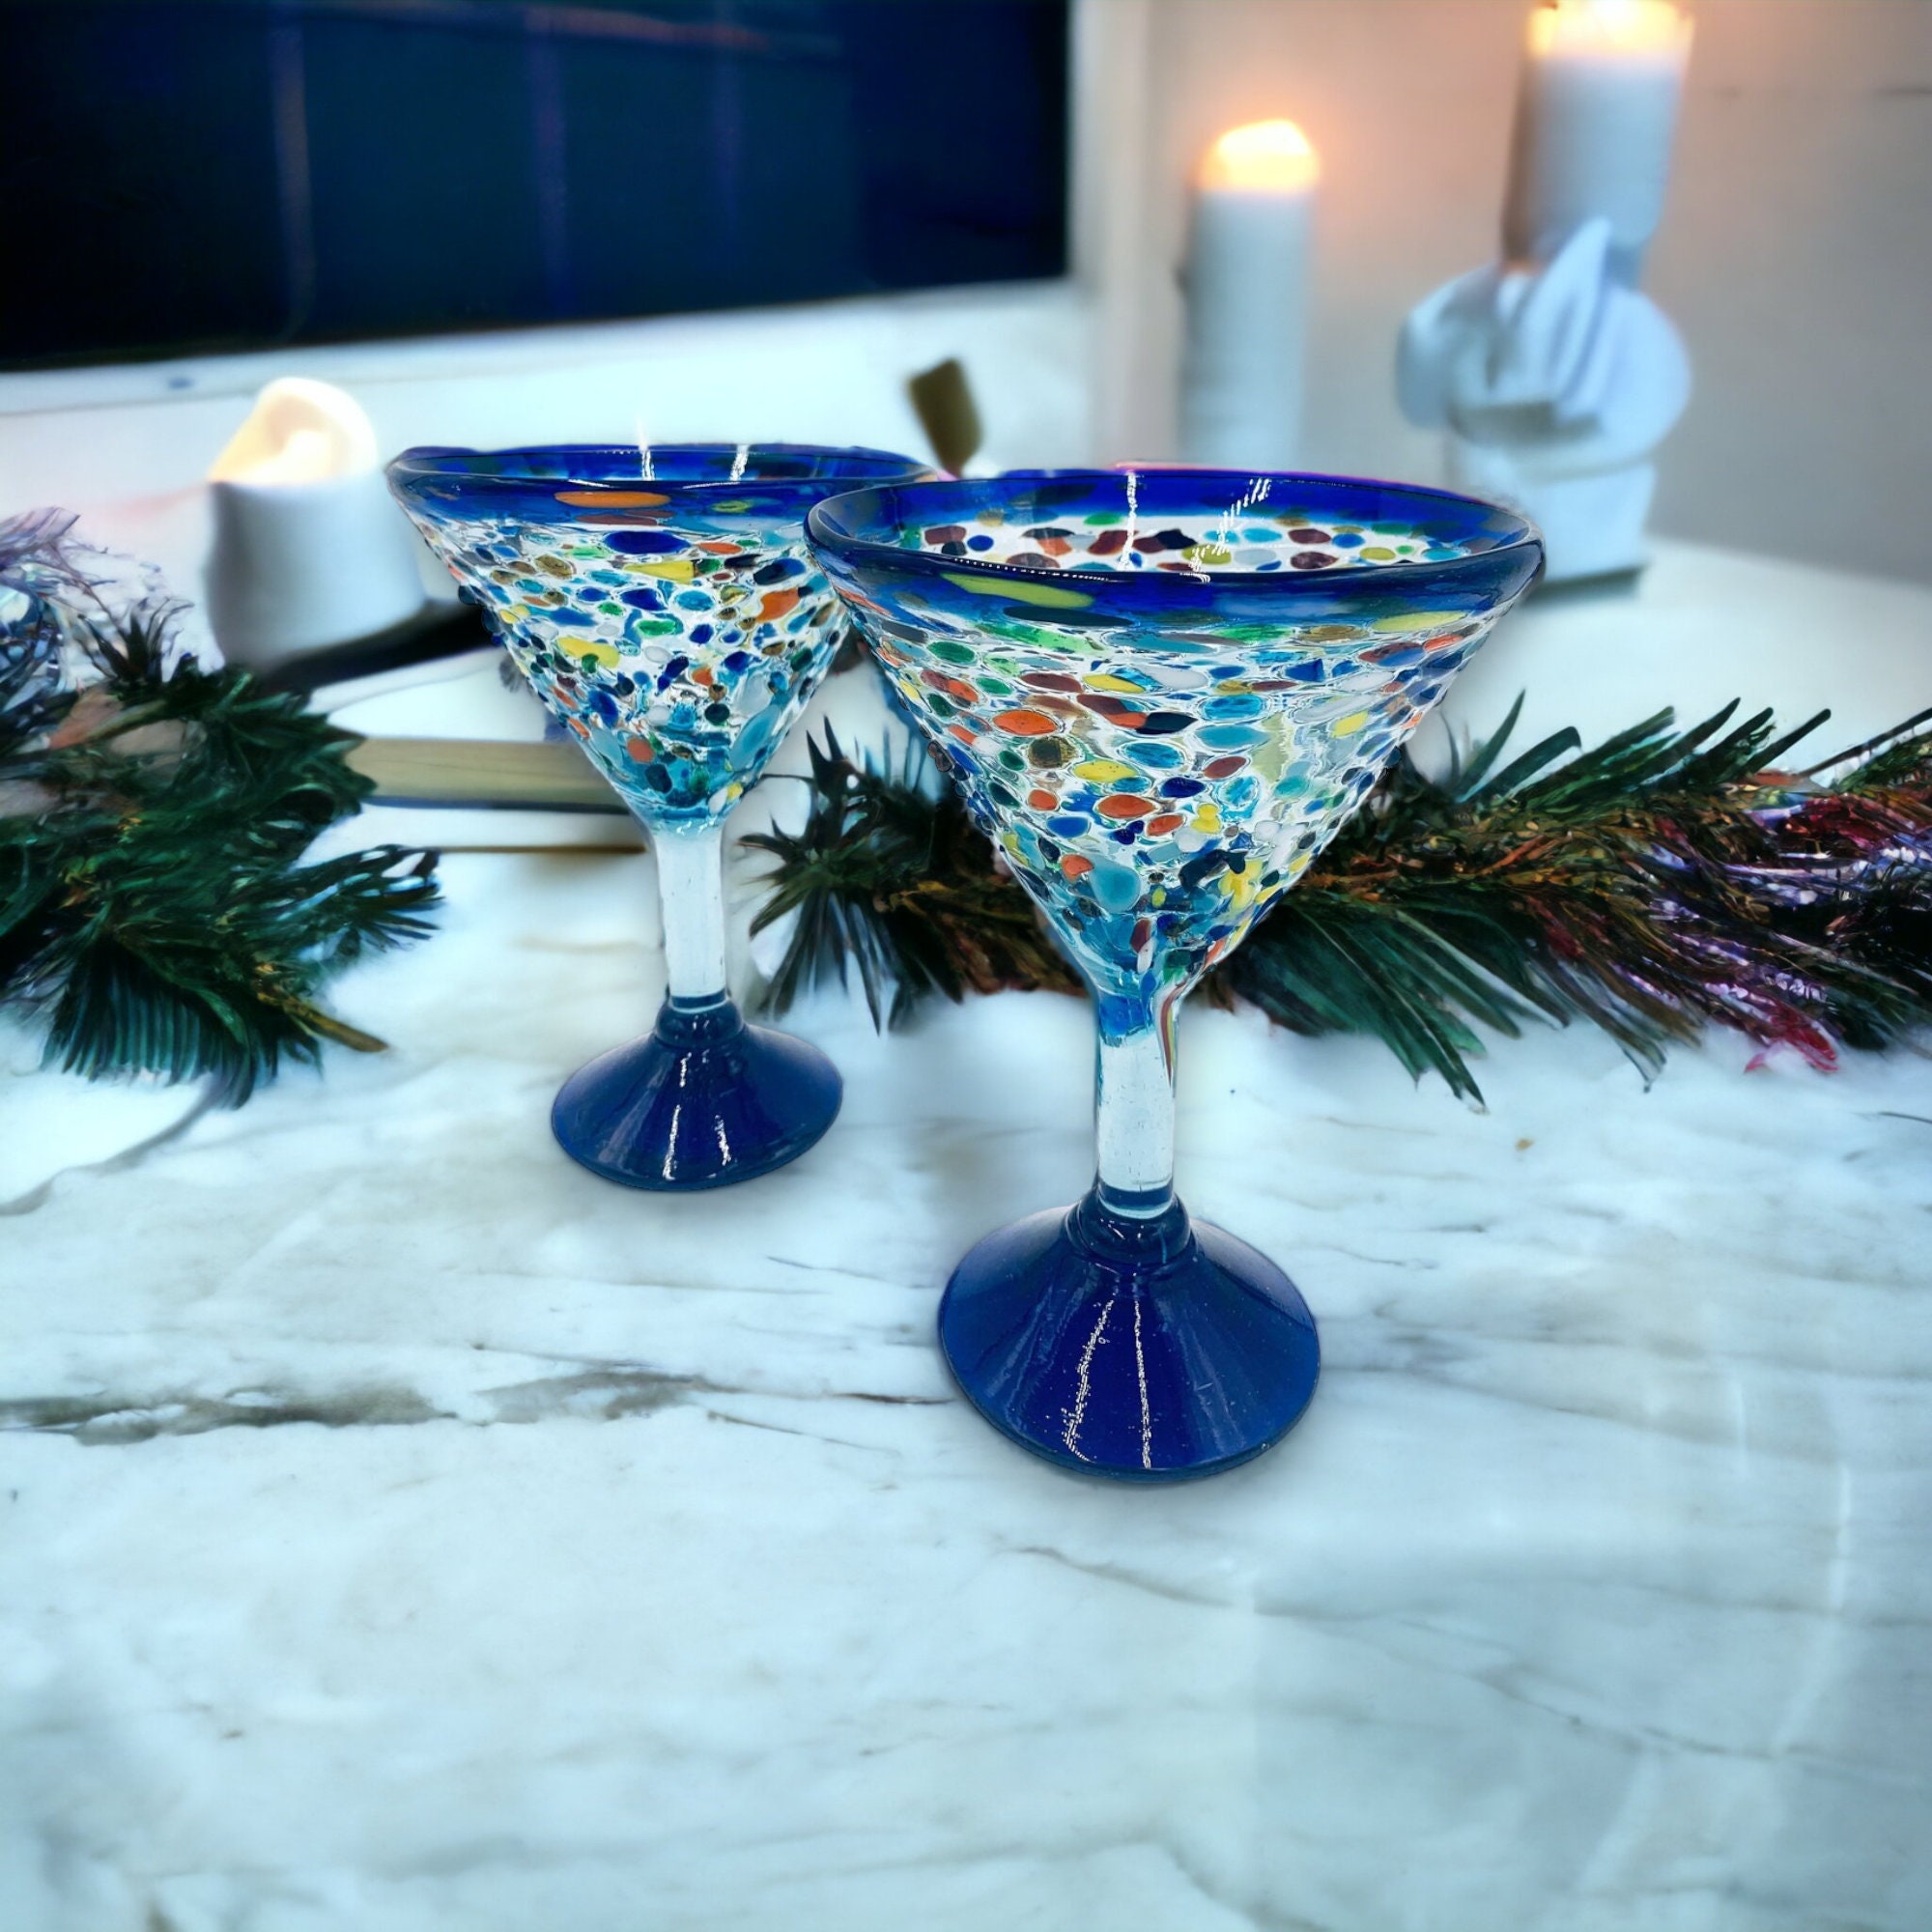 Personalized 8.25 oz. Libbey Cosmopolitan Stemless Martini Glasses